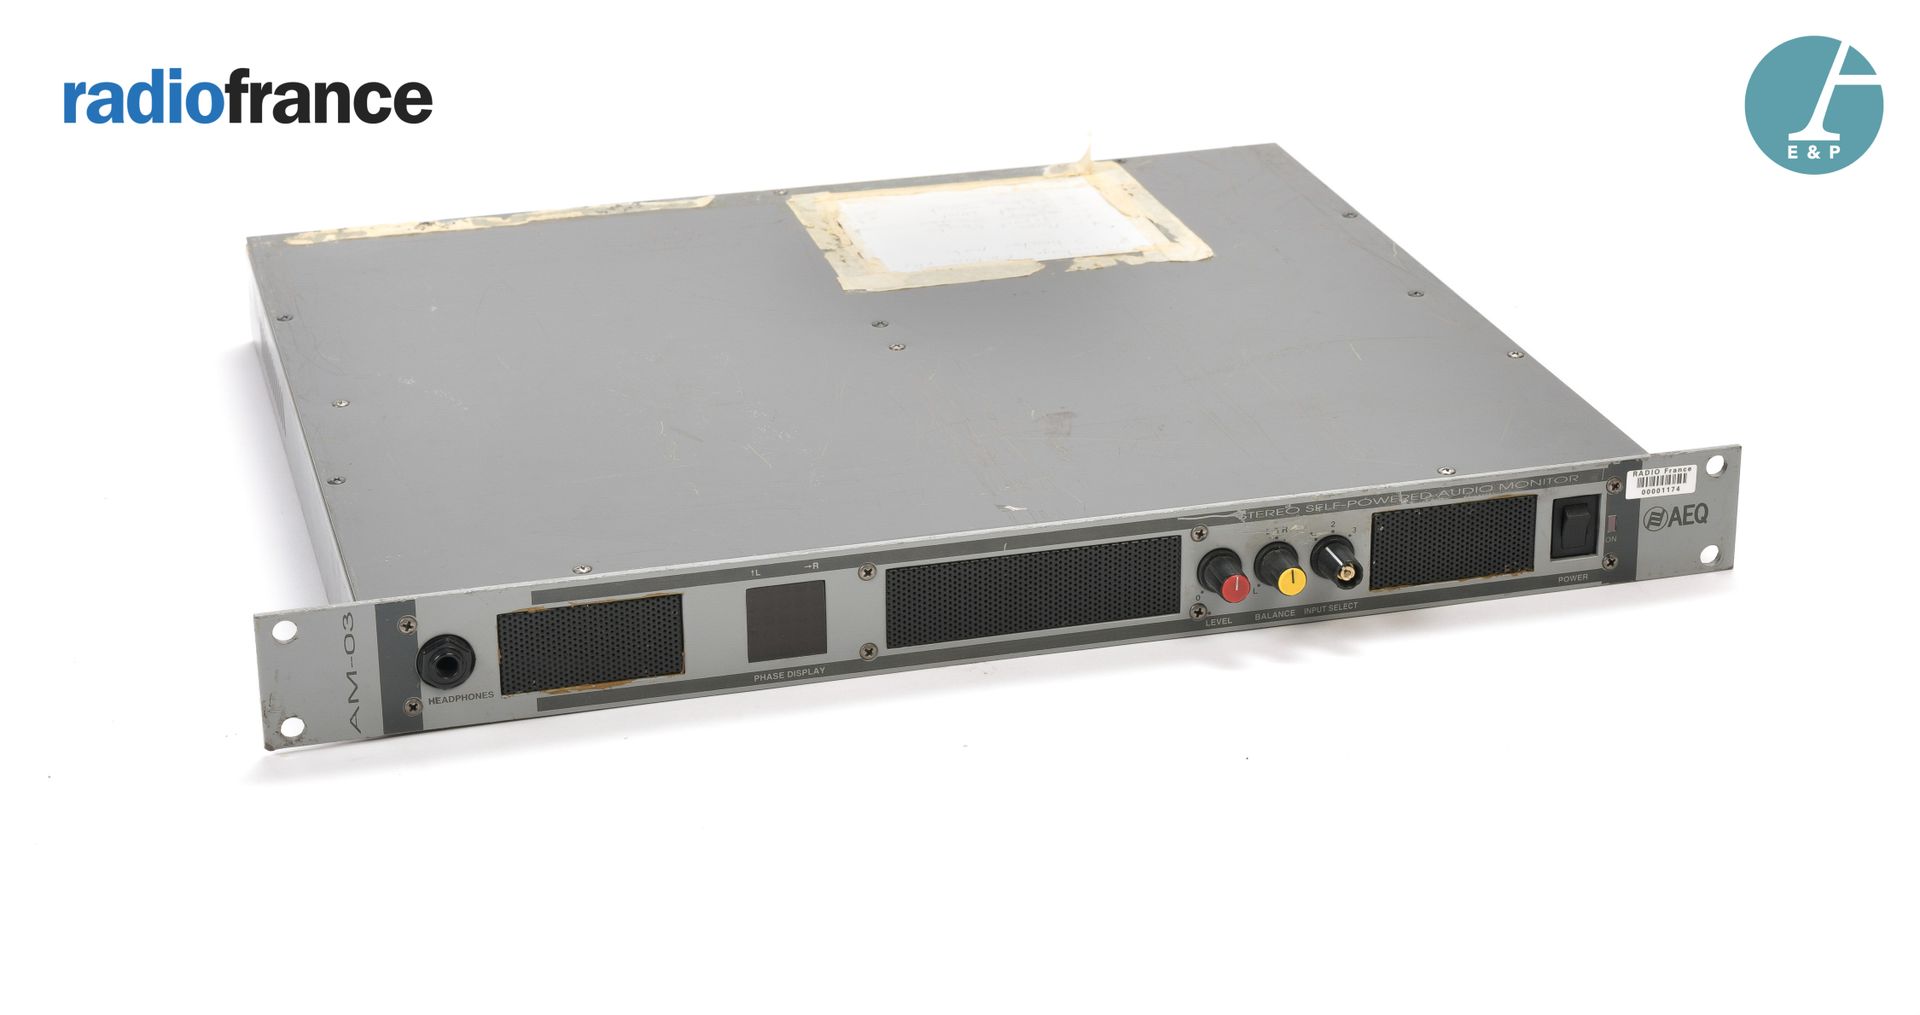 Null AEQ，立体声自供电音频监控器，AM03。

高：4,5厘米 - 宽：48,2厘米 - 深：39厘米

该设备处于使用状态，不保证其功能。